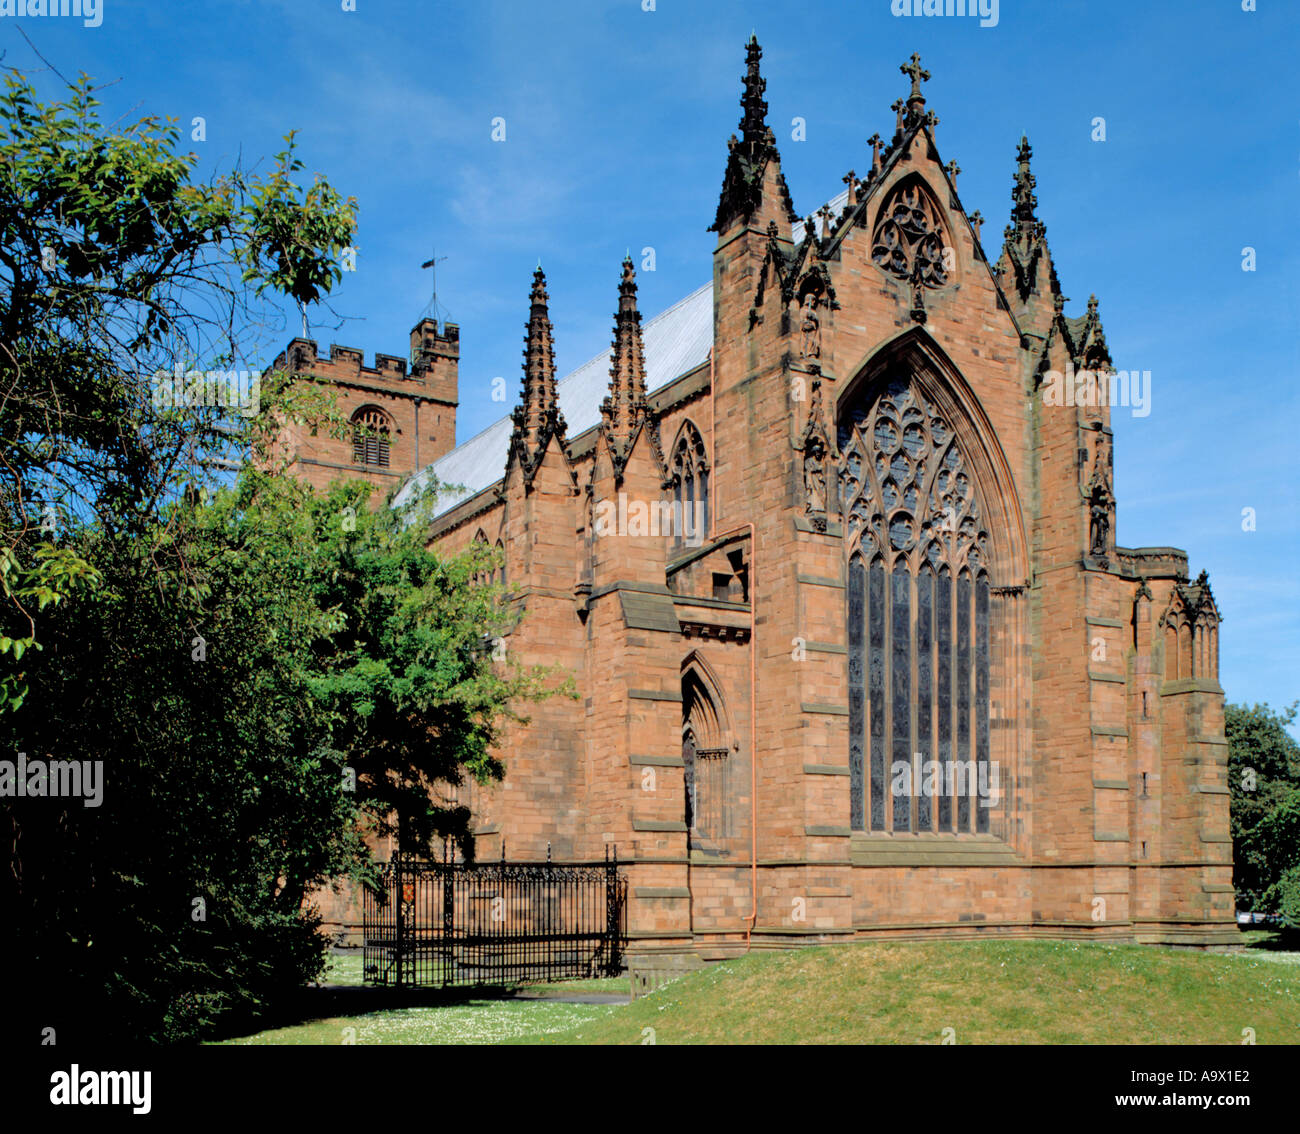 La fachada oriental de la Catedral de Carlisle, Carlisle, Cumbria, Inglaterra, Reino Unido. Foto de stock